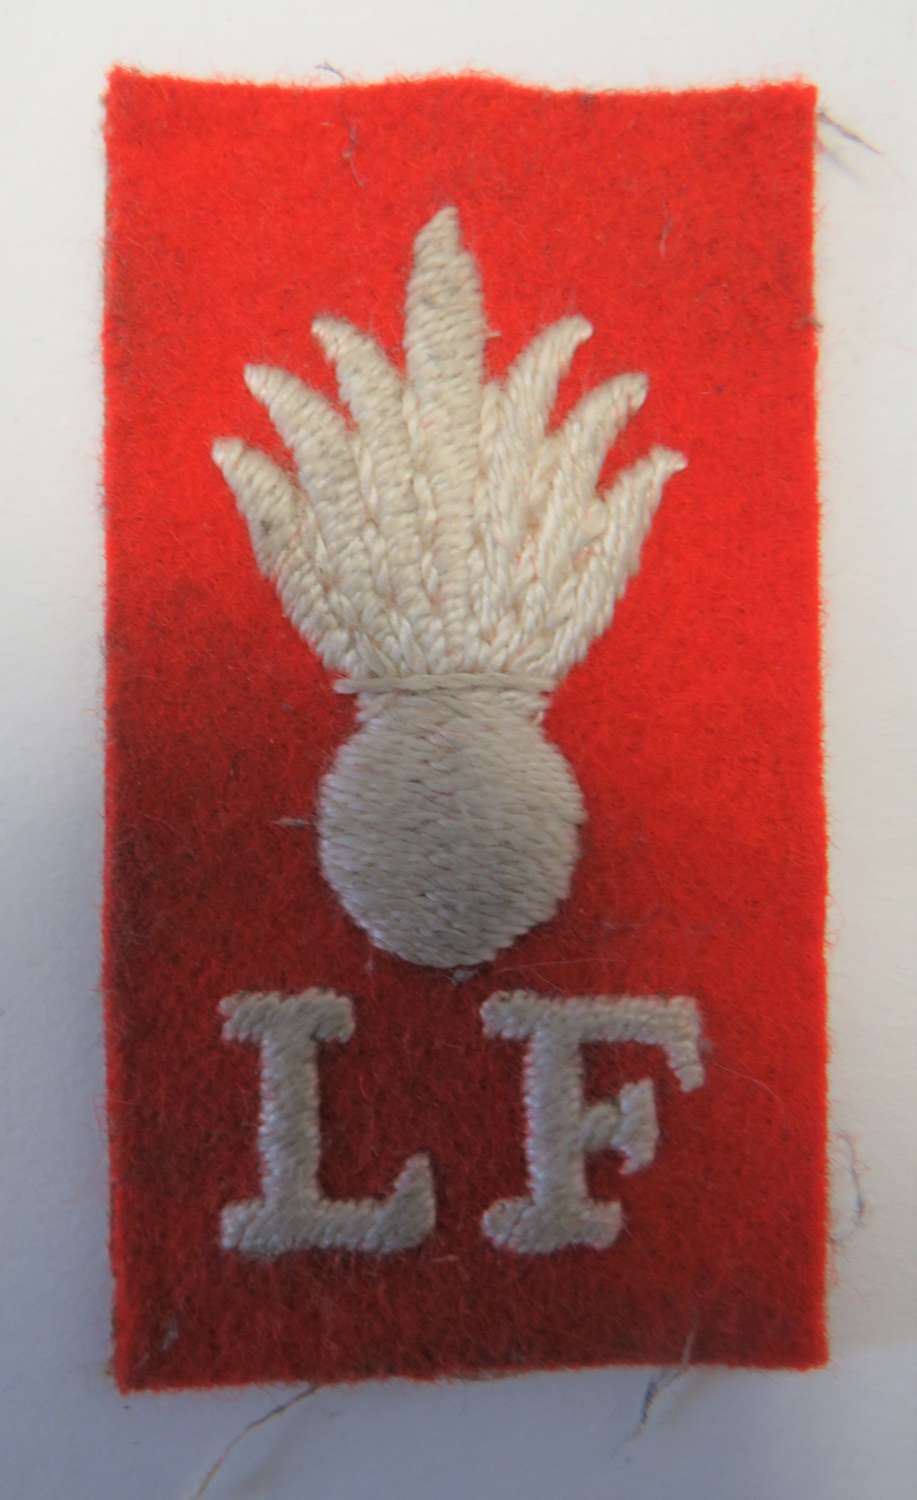 Lancashire Fusiliers Pagri Badge